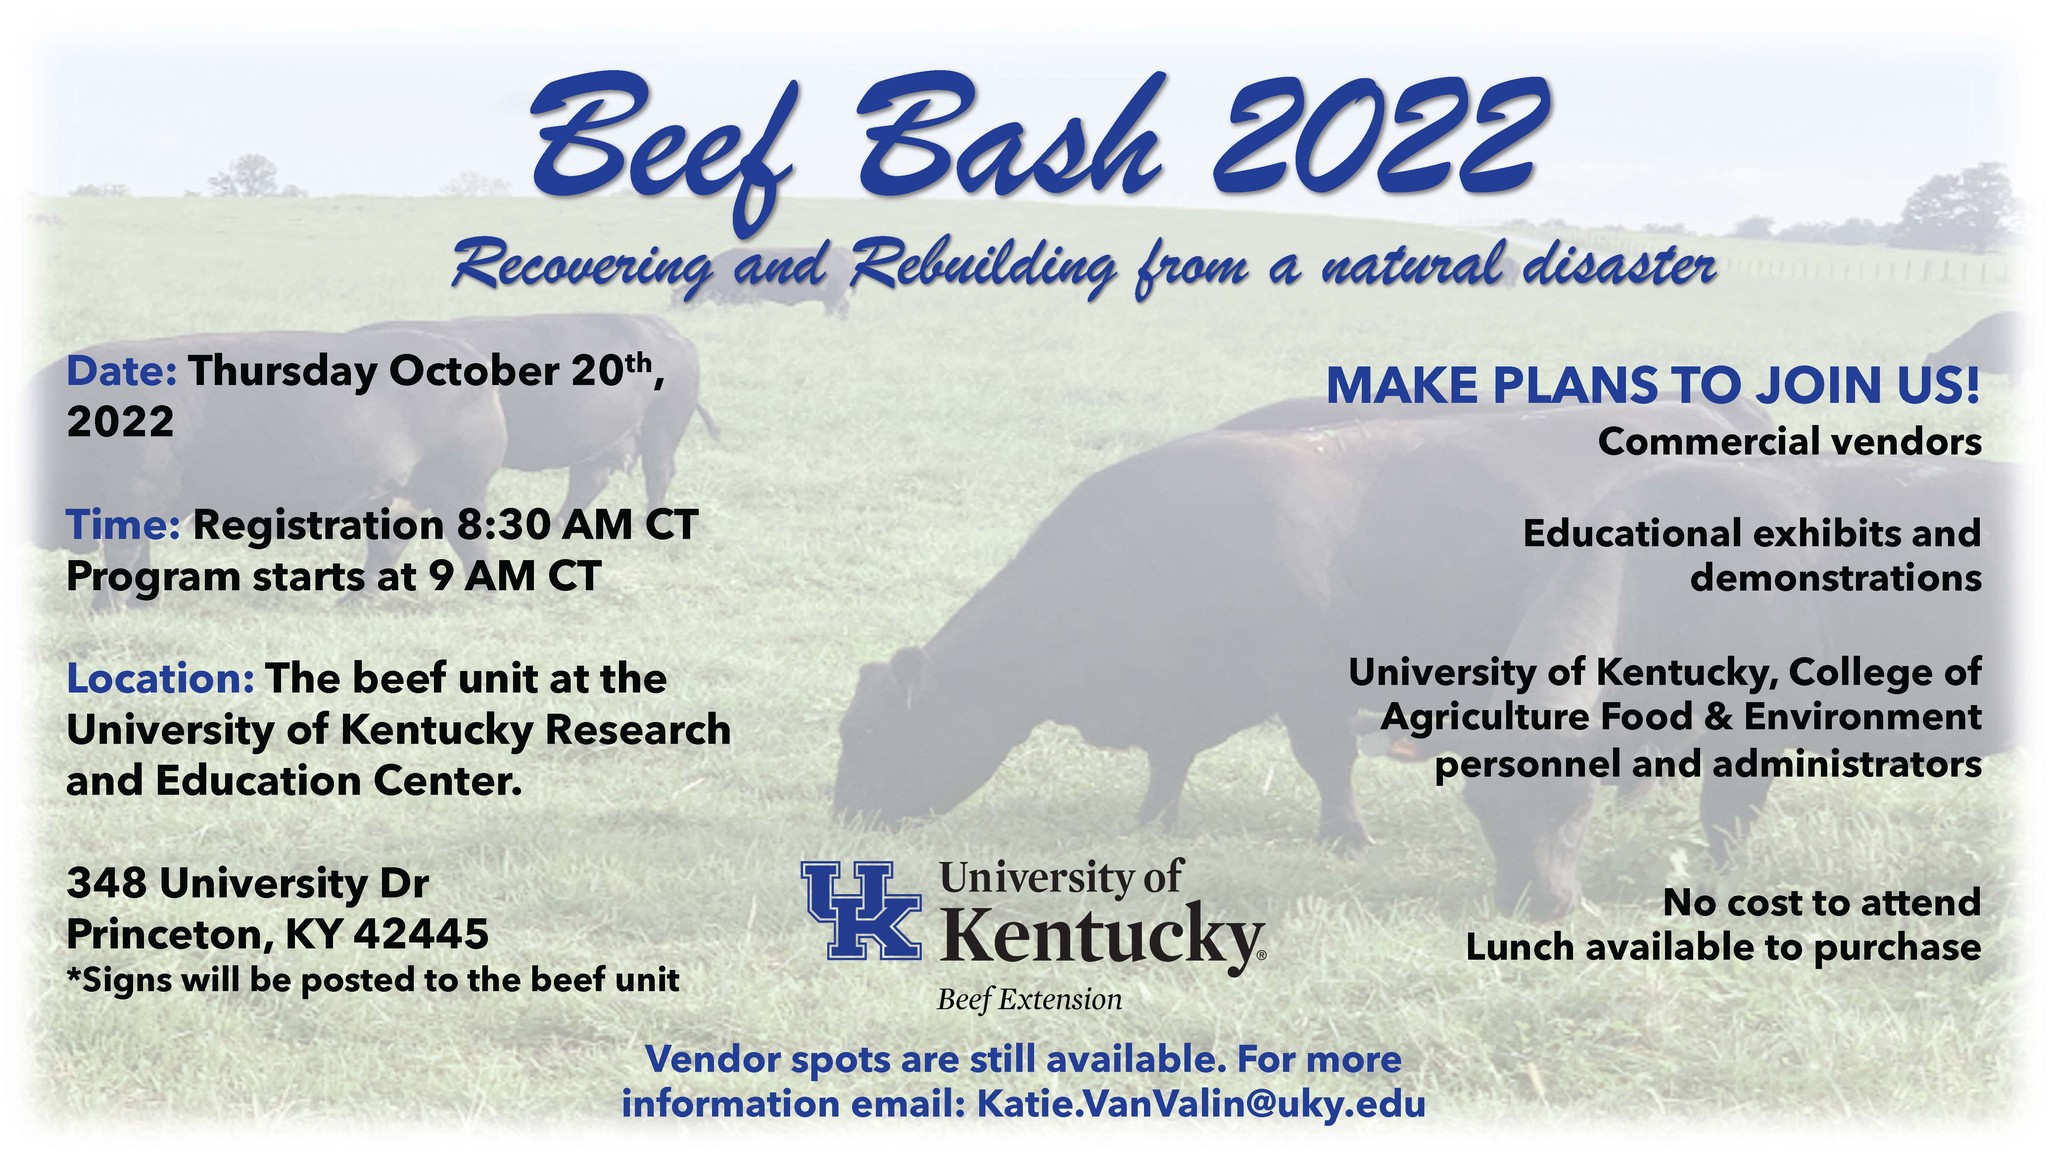 Beef Bash 2022 Flyer for event happening Thursday, October 20